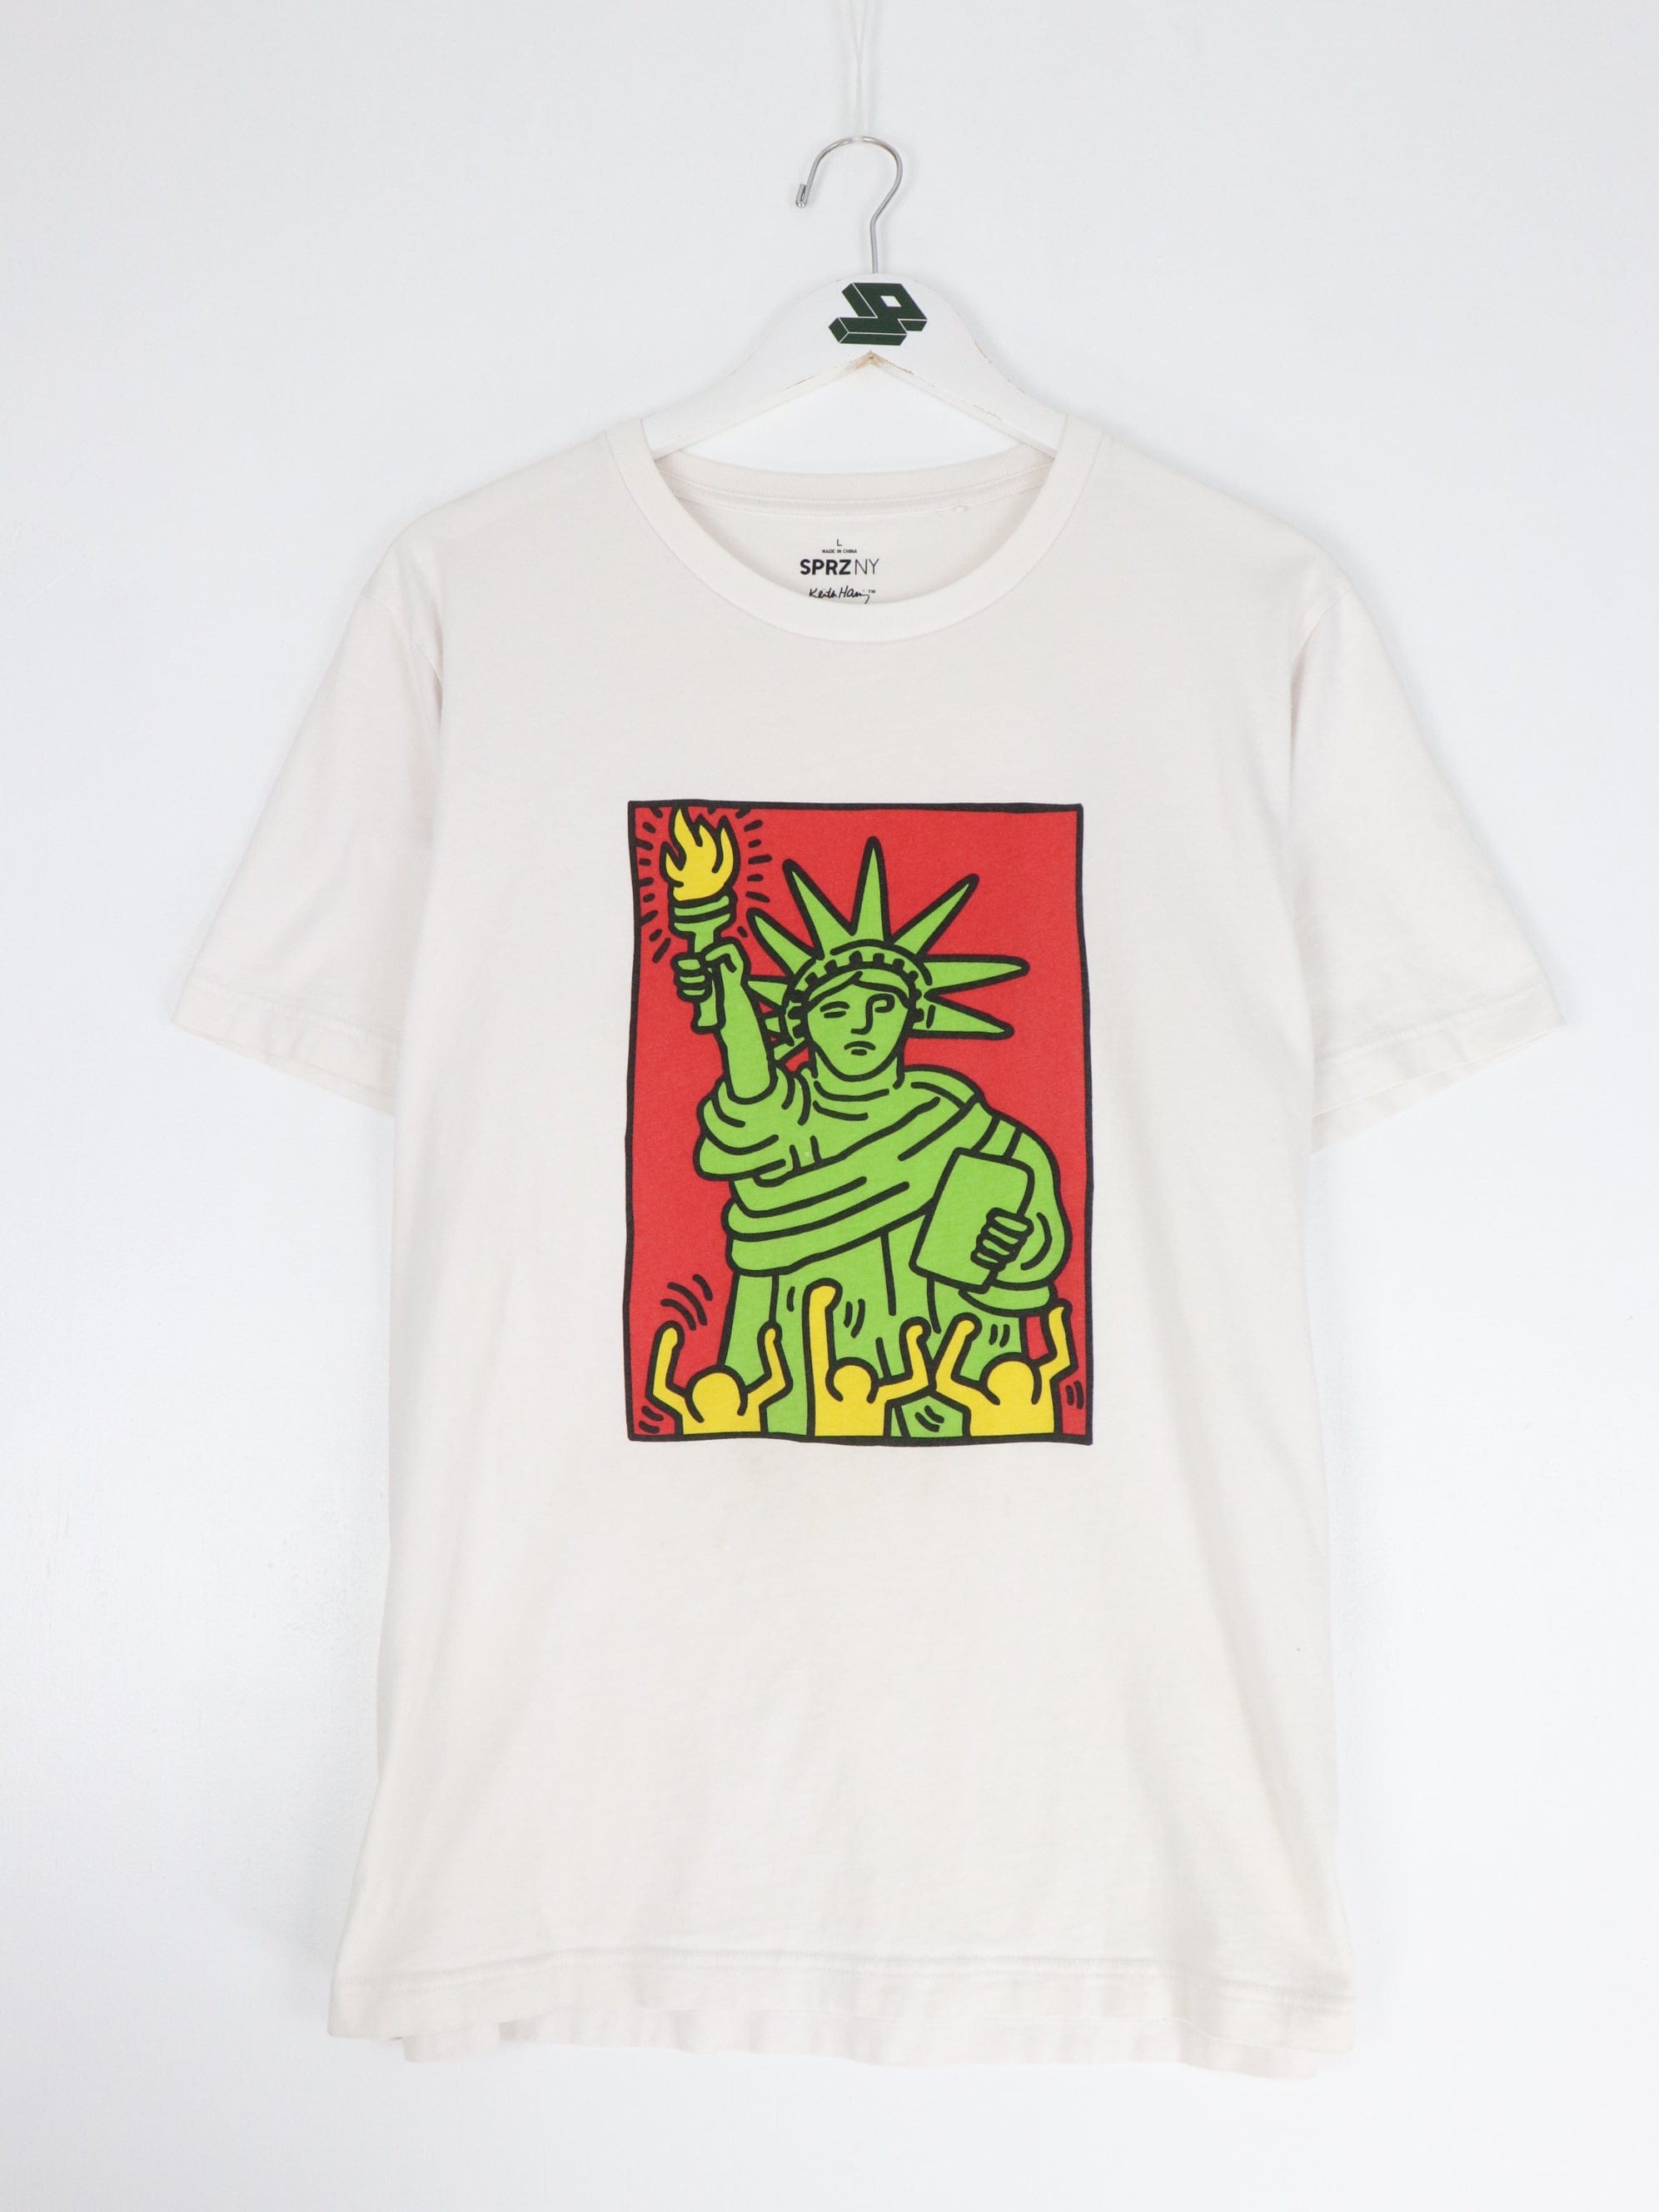 Uniqlo SPRZ NY X Keith Haring T Shirt Mens L White New York Statue